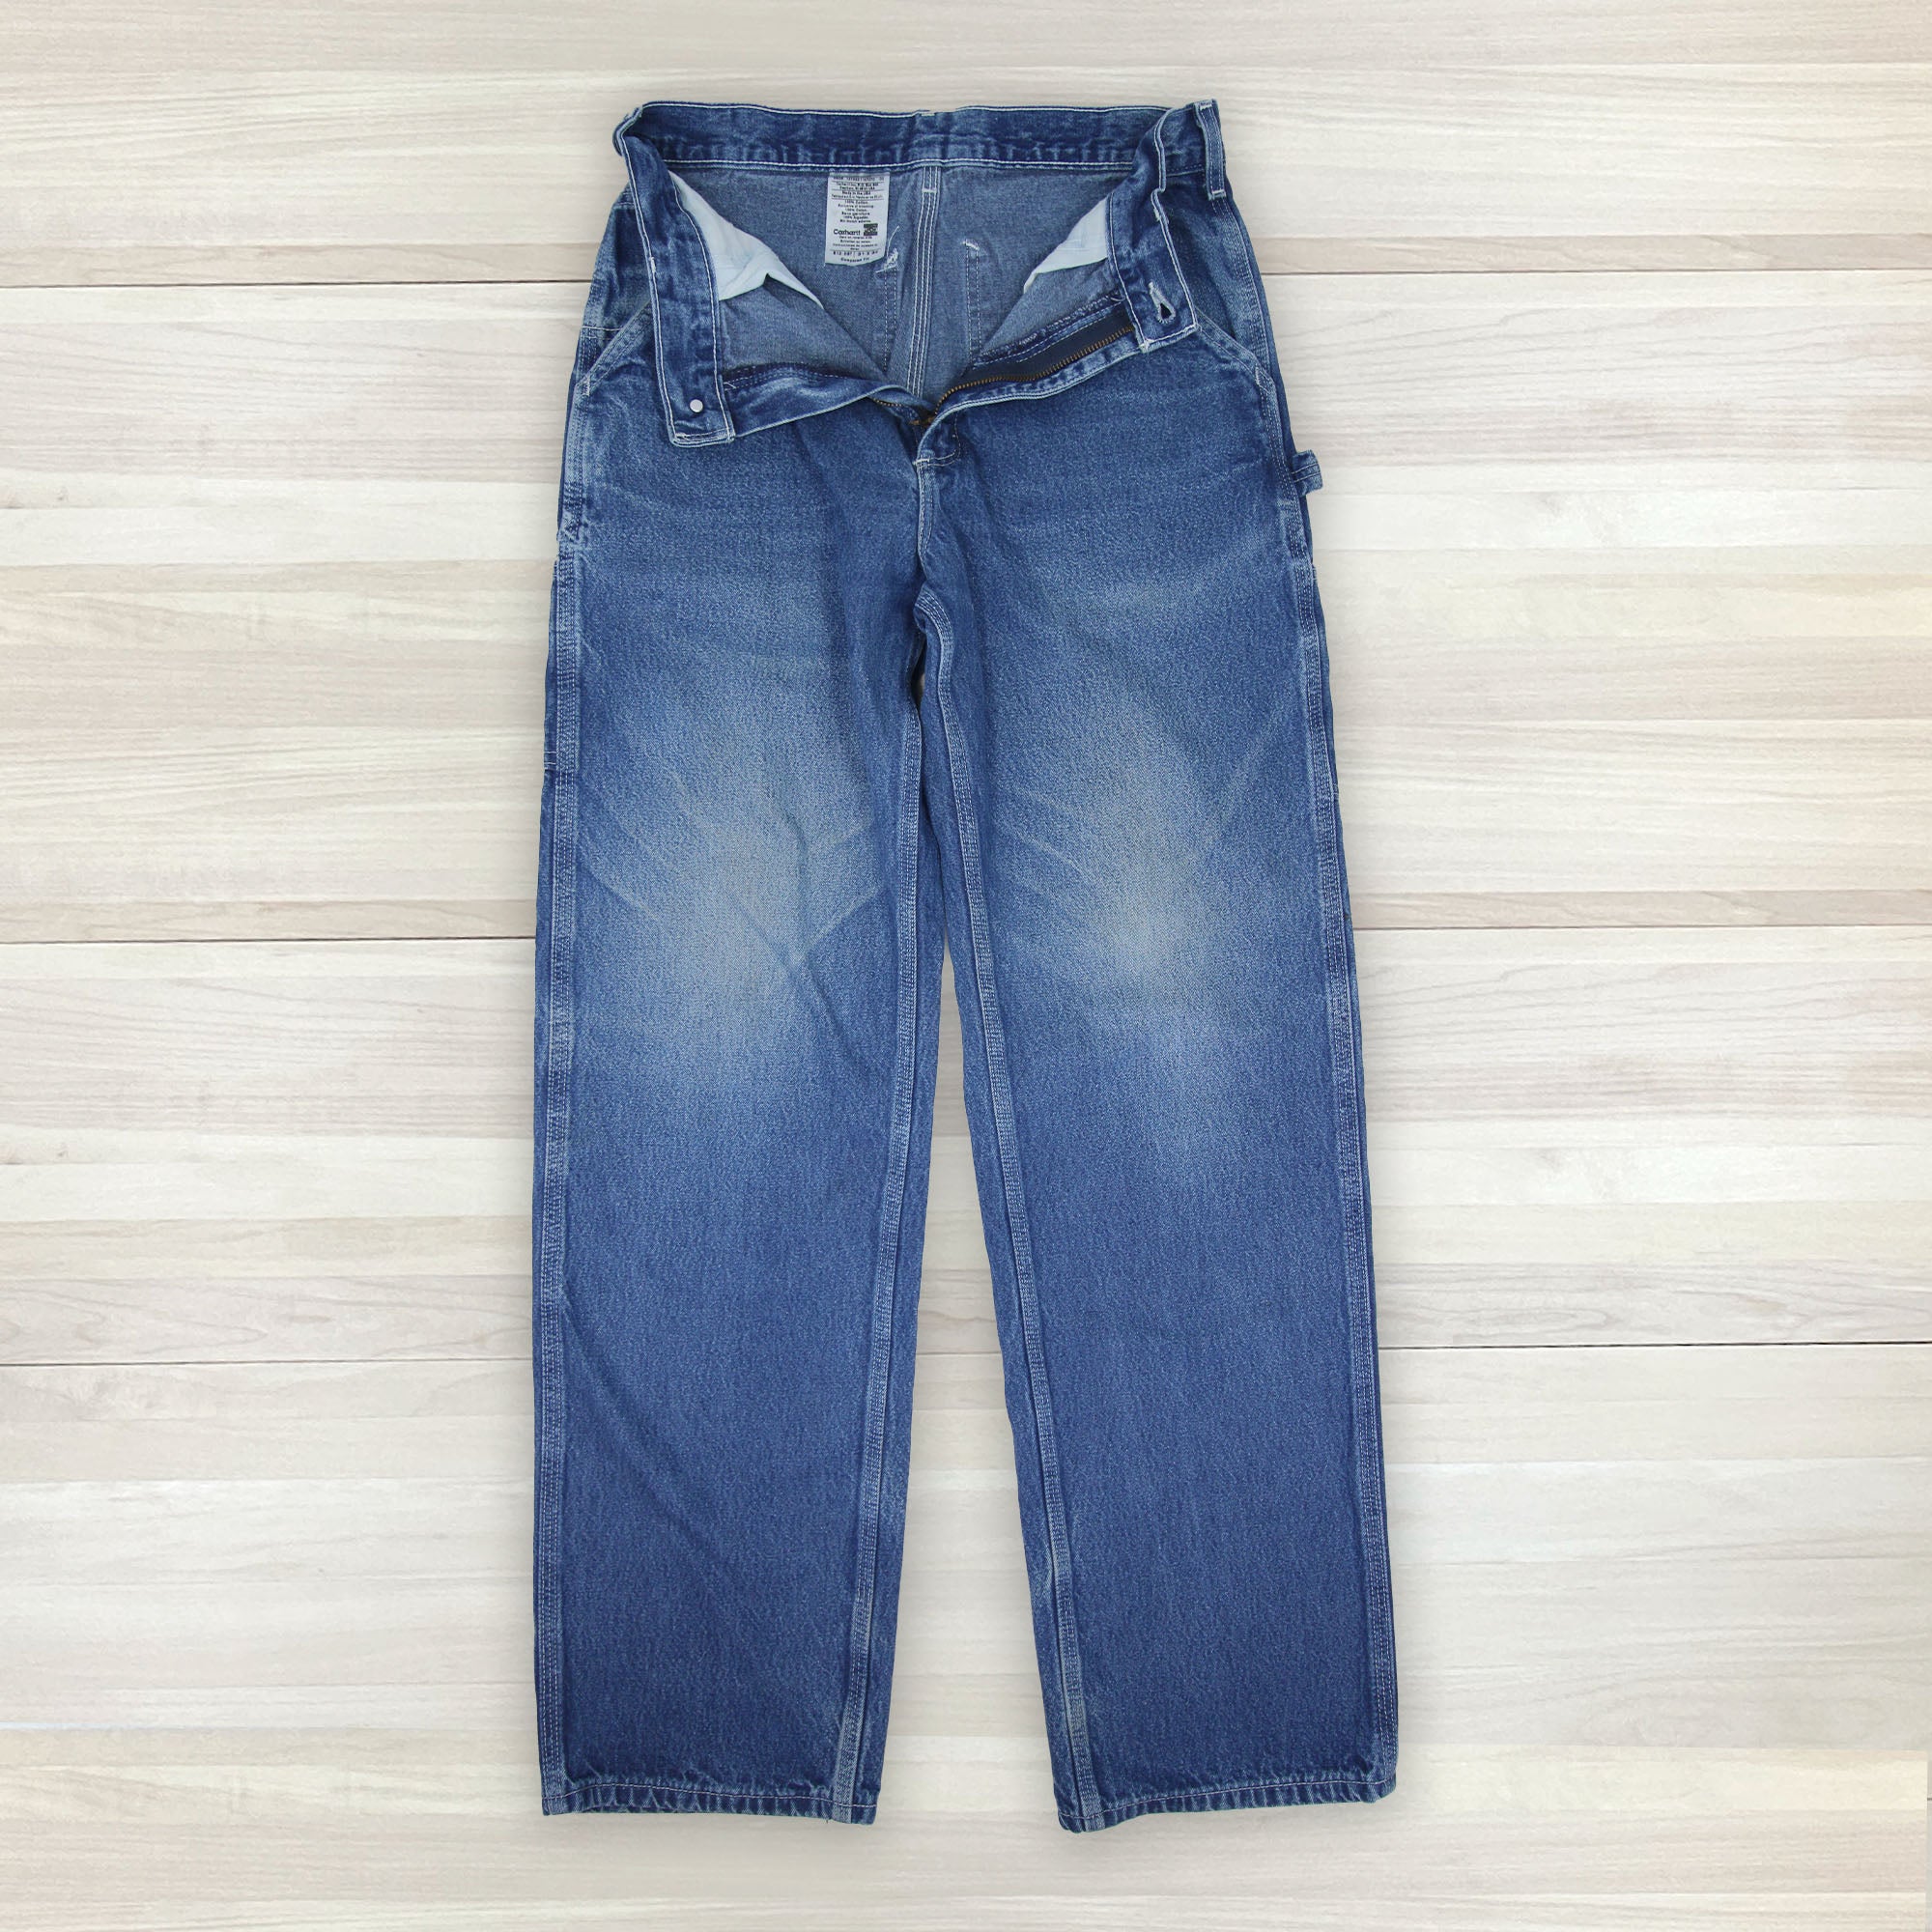 Men's Carhartt B13 DST Carpenter Jeans - Measures 30x33 - 0